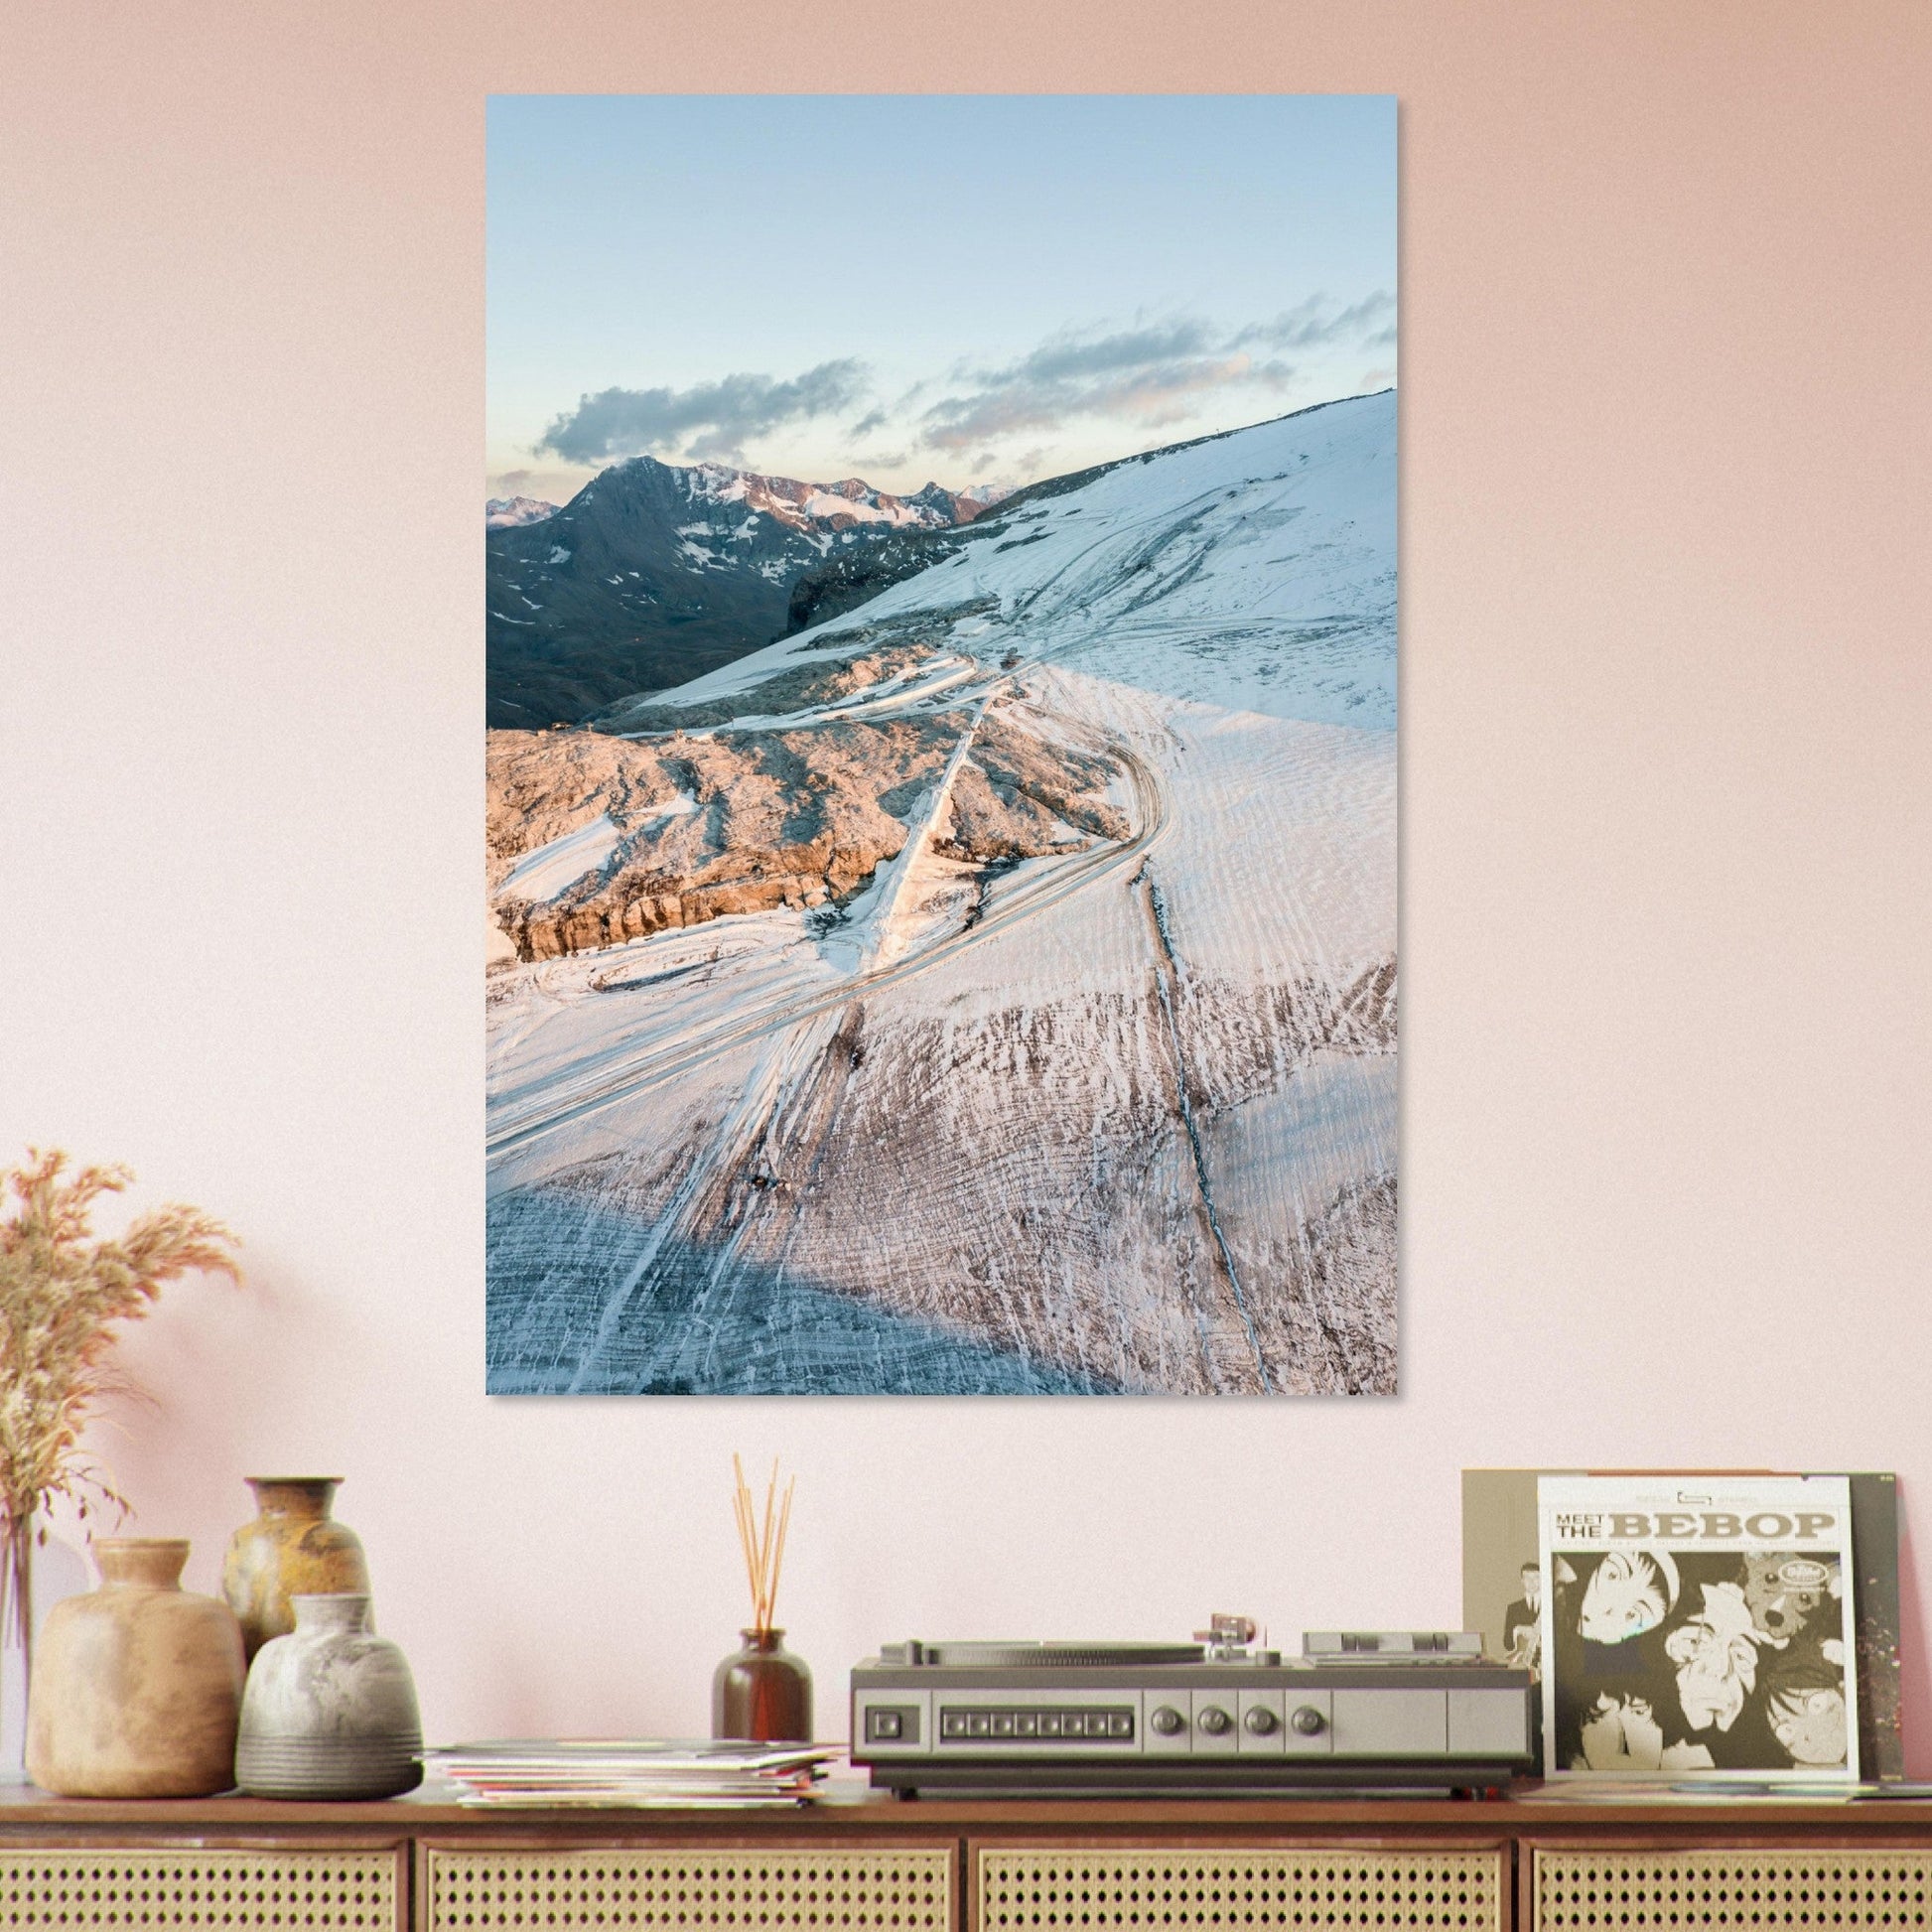 Vente Photo de la Glacier de la Grande Motte, Massif de la Vanoise #1 - Tableau photo alu montagne